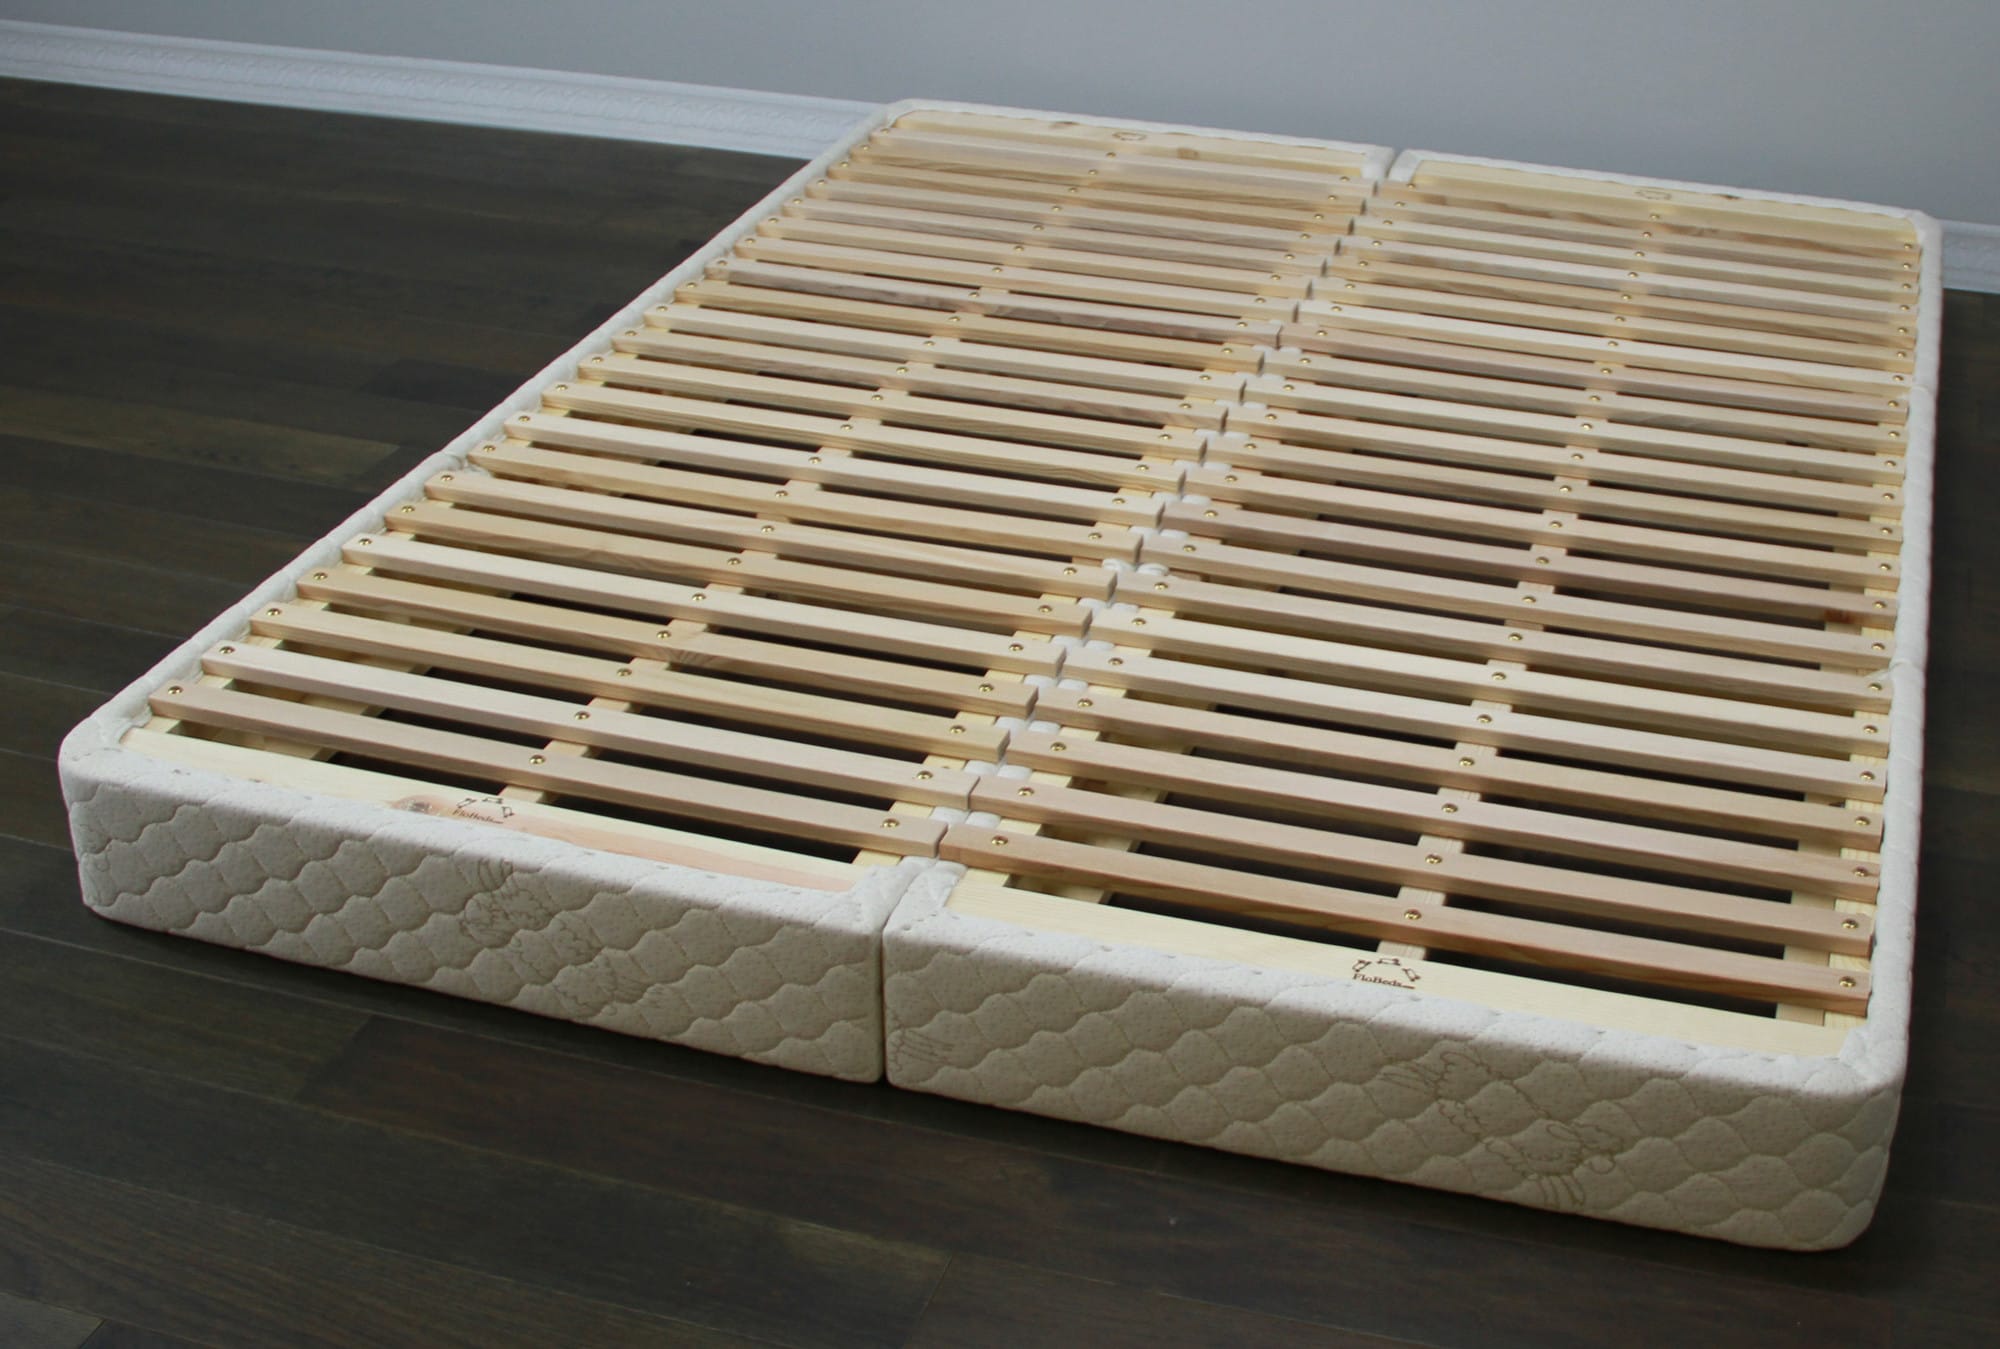 slat foundation for latex mattress